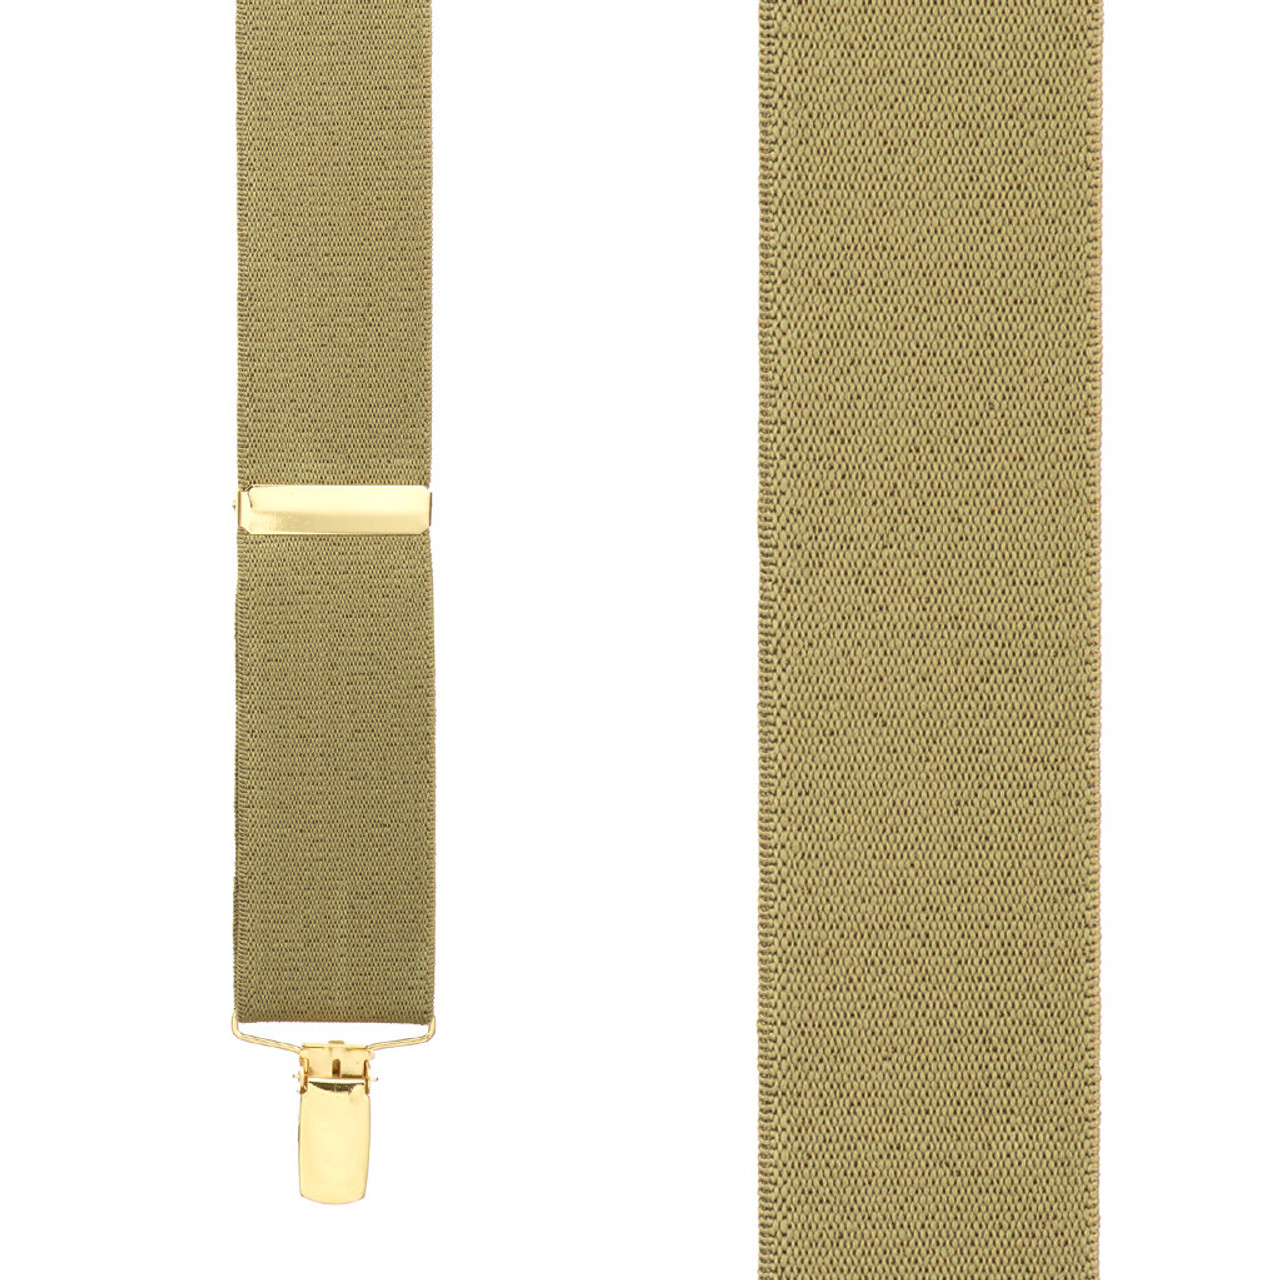 TAN Brass Clip Suspenders, 1.5-inch Wide